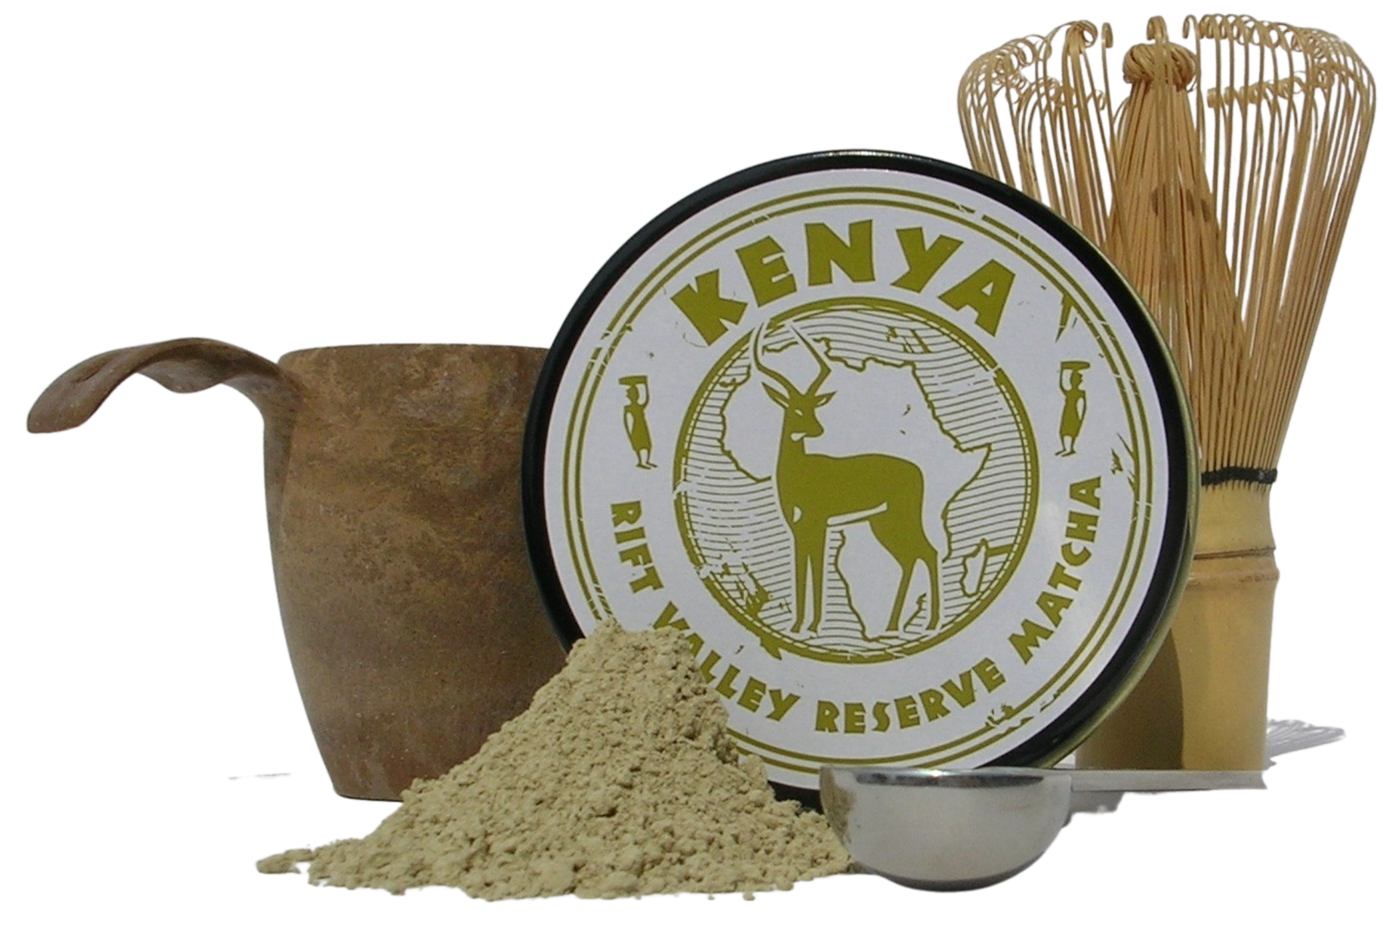 Kenya Rift Vally Reserve White Matcha Tea - TeamANR